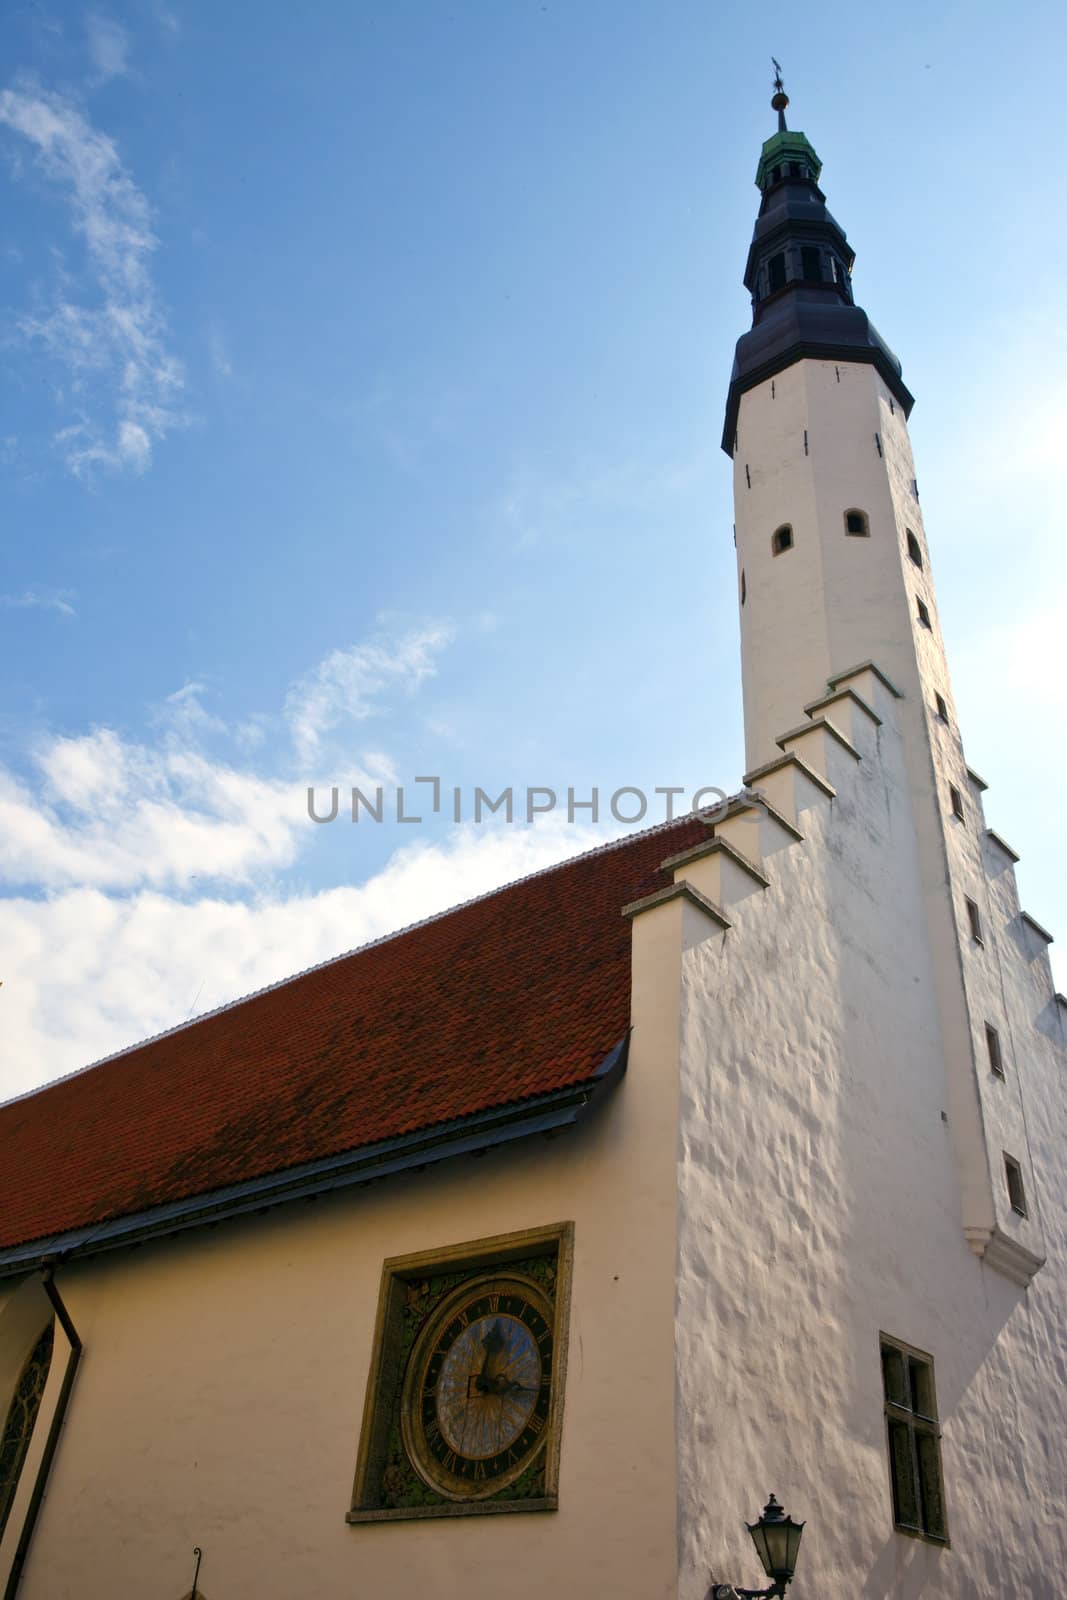 Church of the Holy Ghost in Tallinn, Estonia.